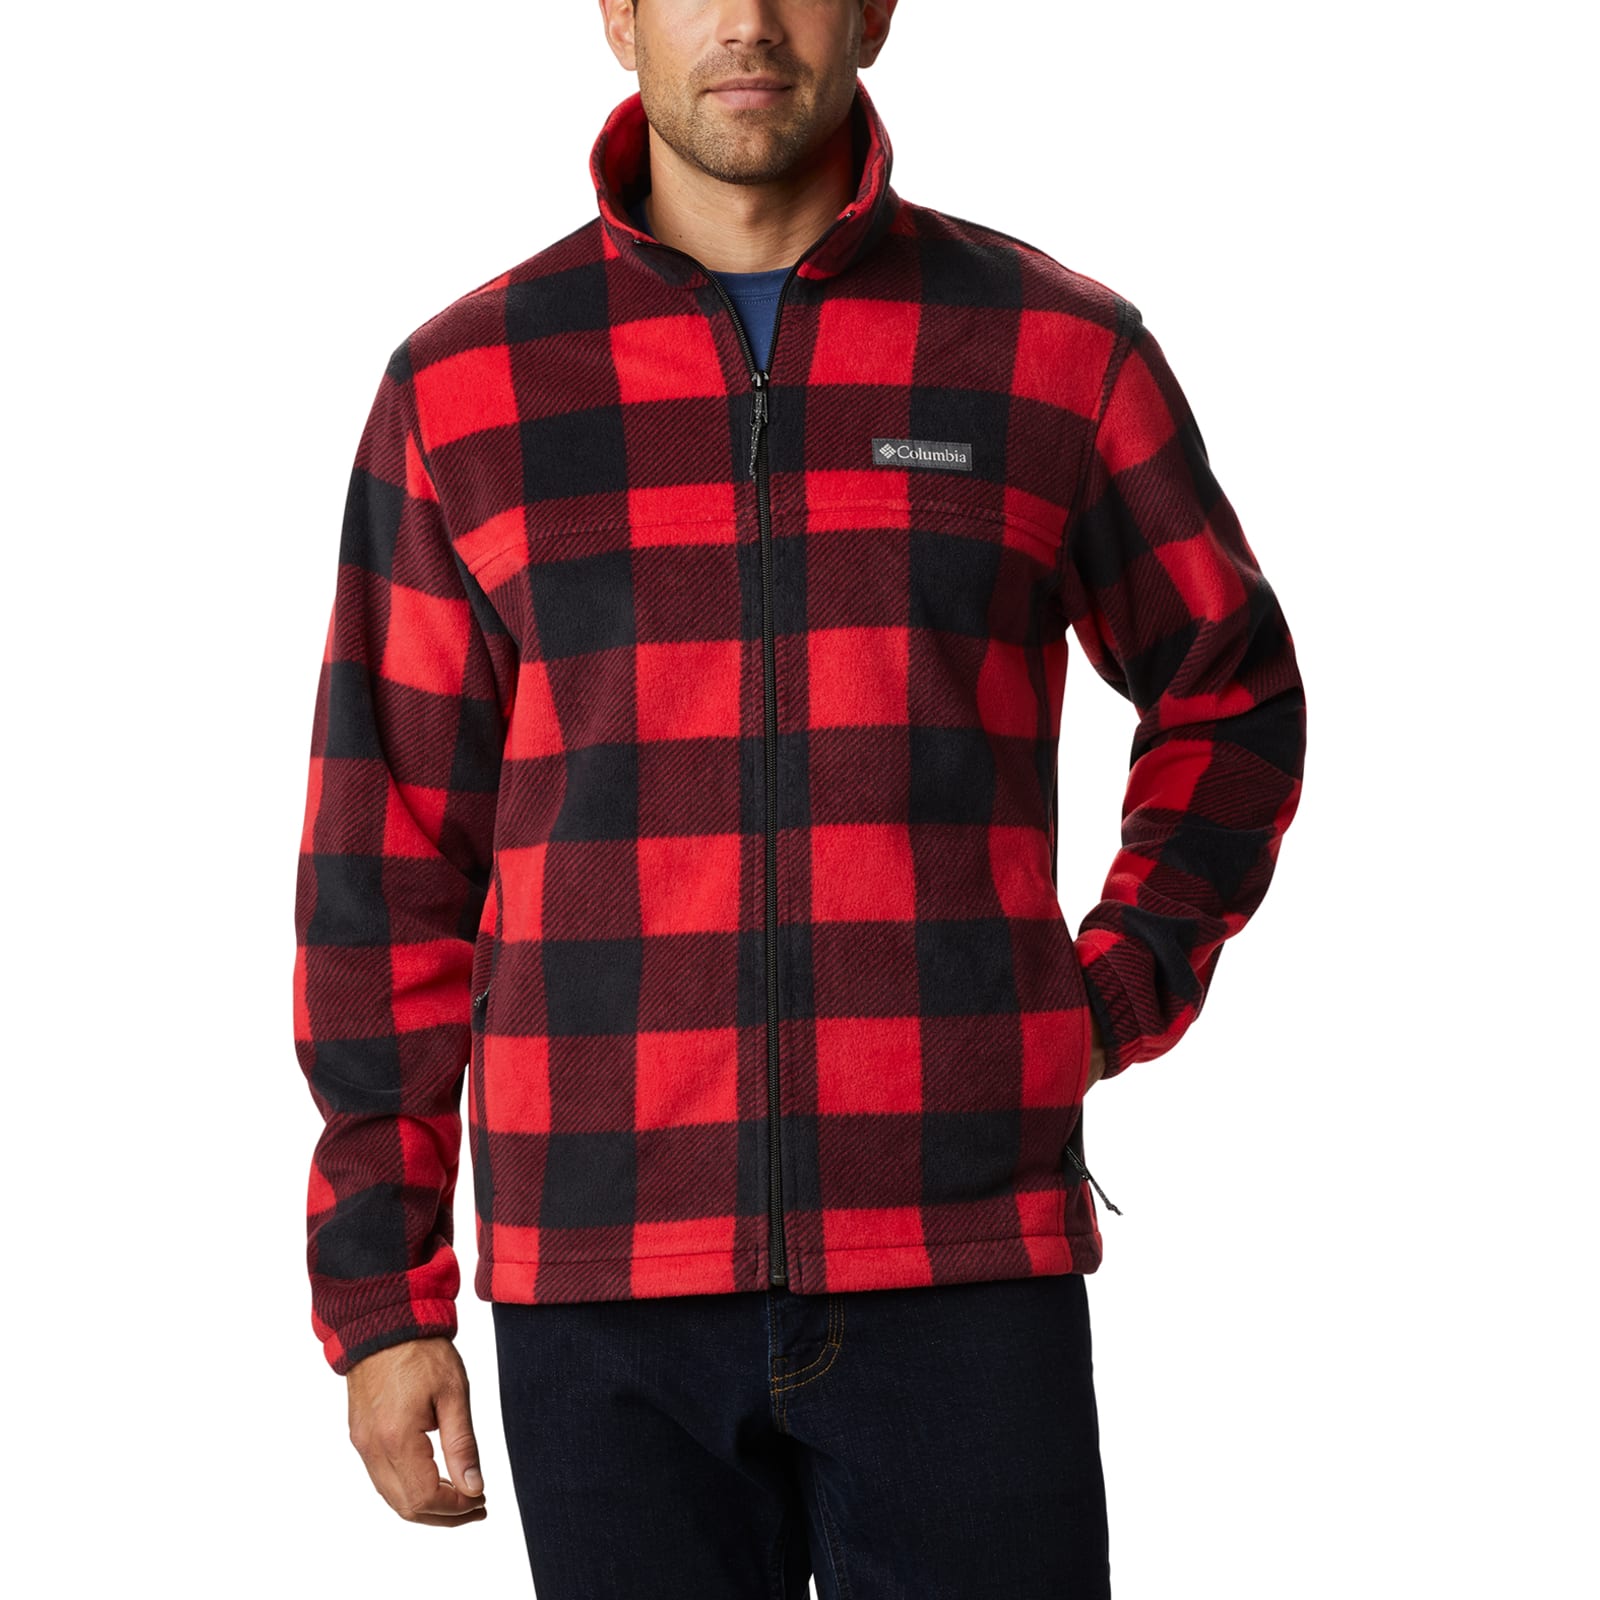 Buffalo Outdoors® Workwear Plush Sleep Pants - Red Buffalo Plaid Pants